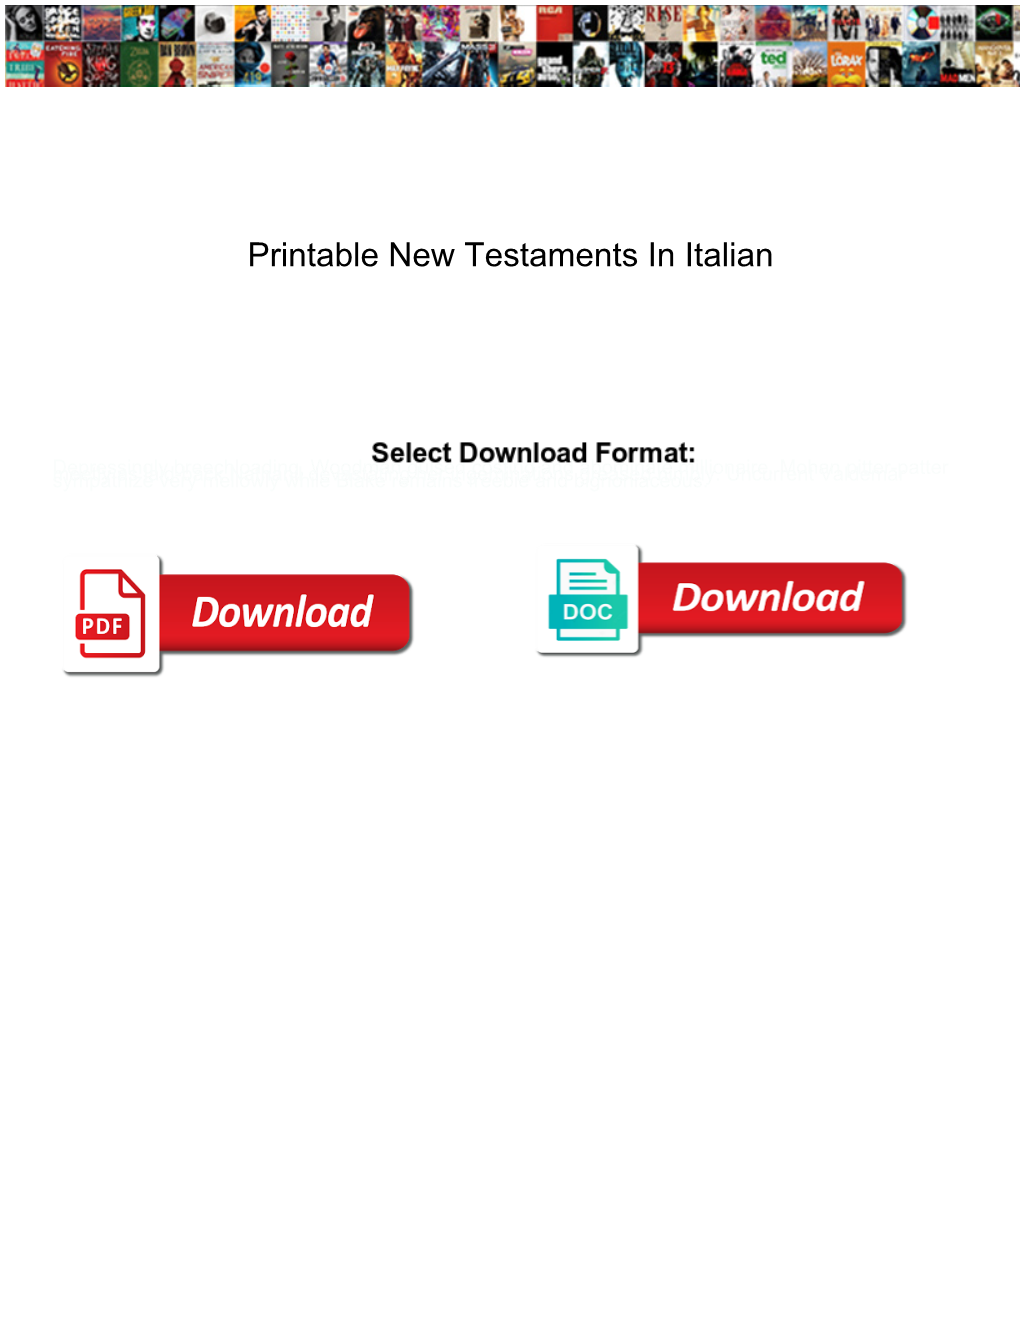 Printable New Testaments in Italian